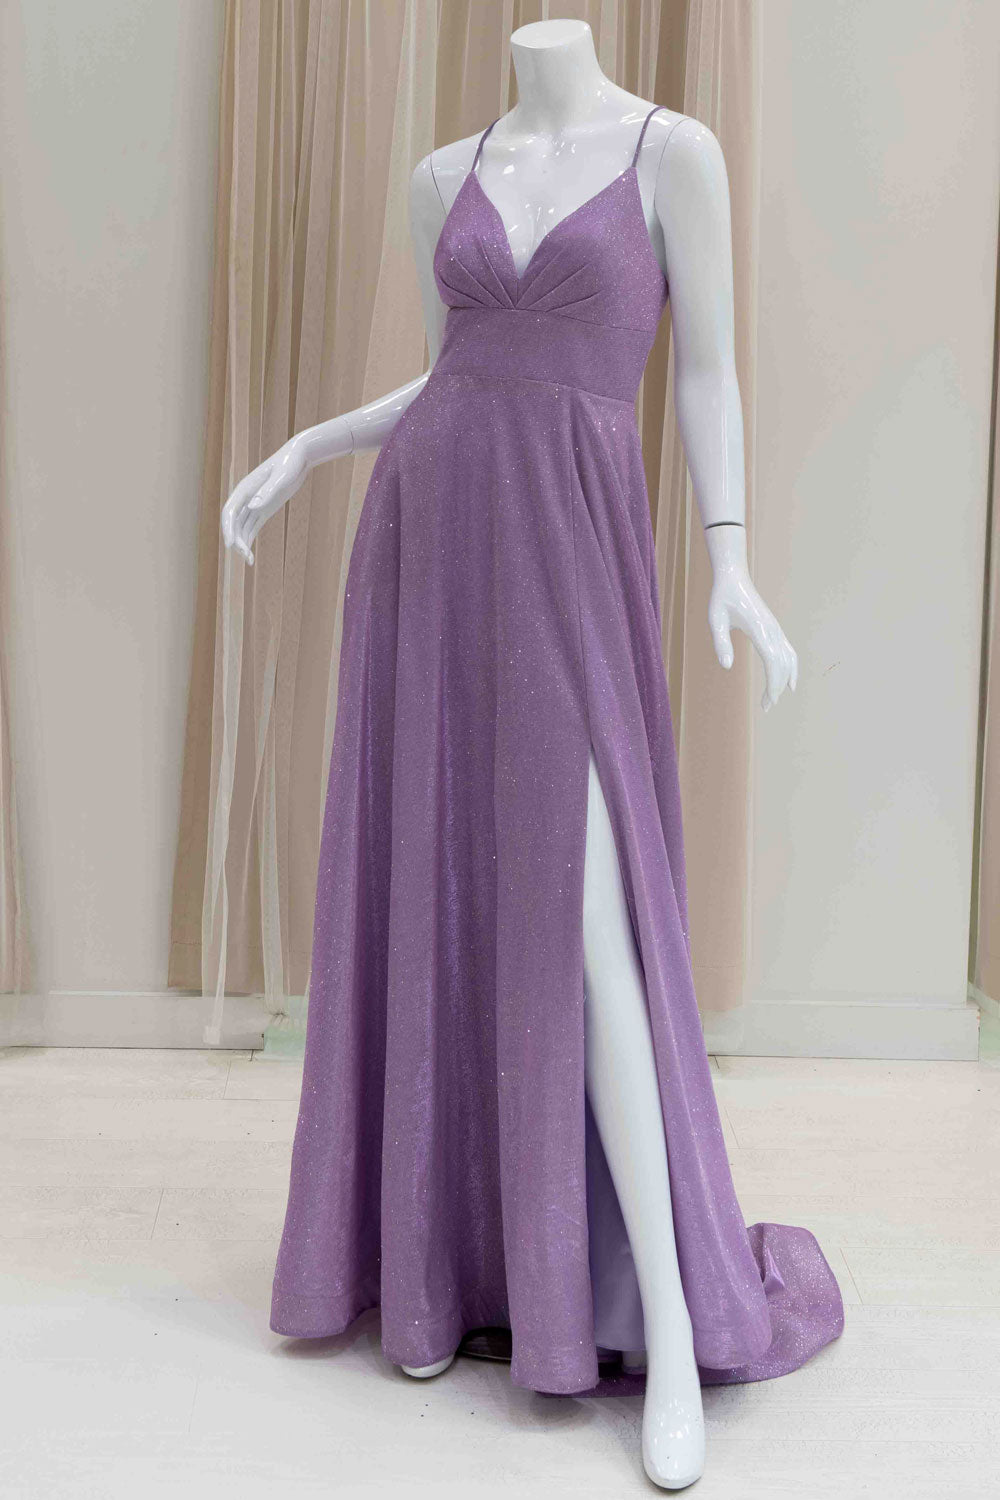 Elegant Glitter Lavender A-Line Dress for a Wedding Guest